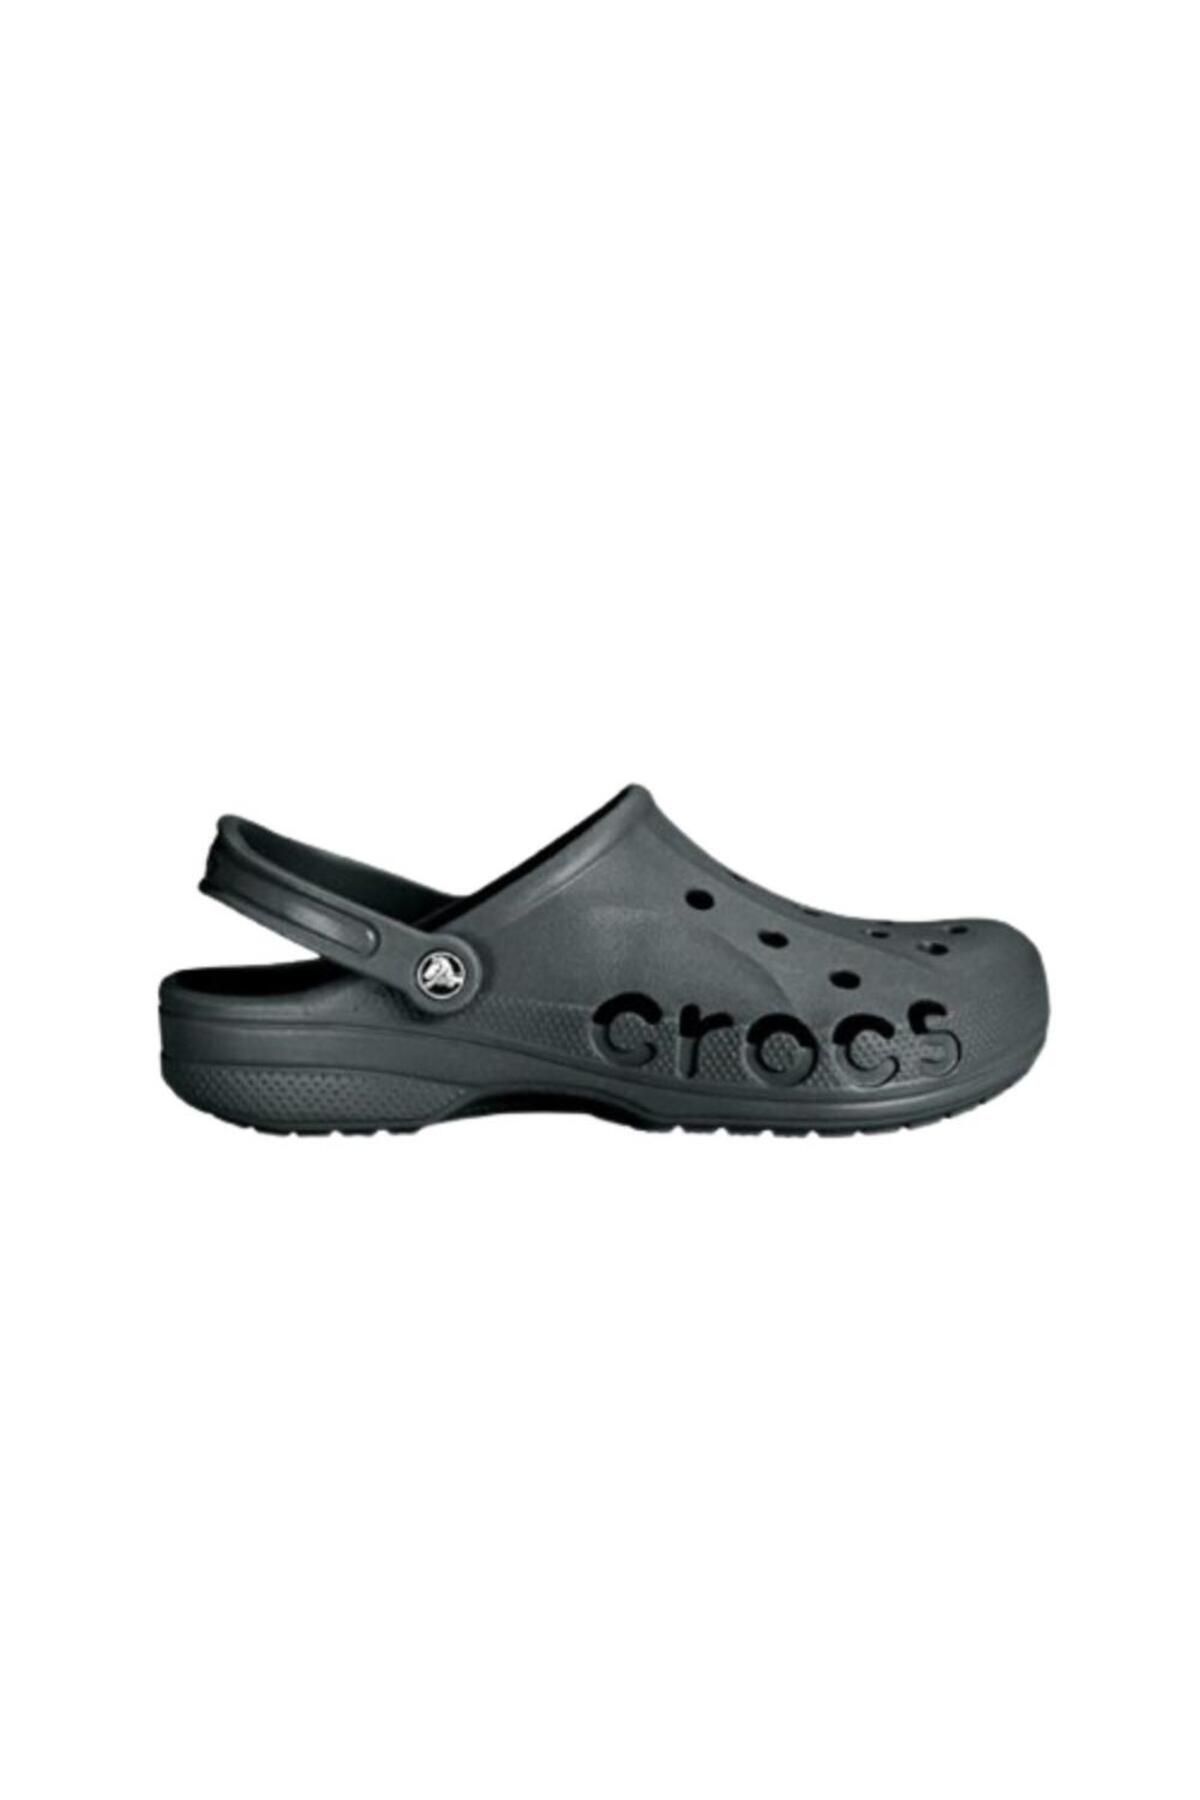 Crocs Baya